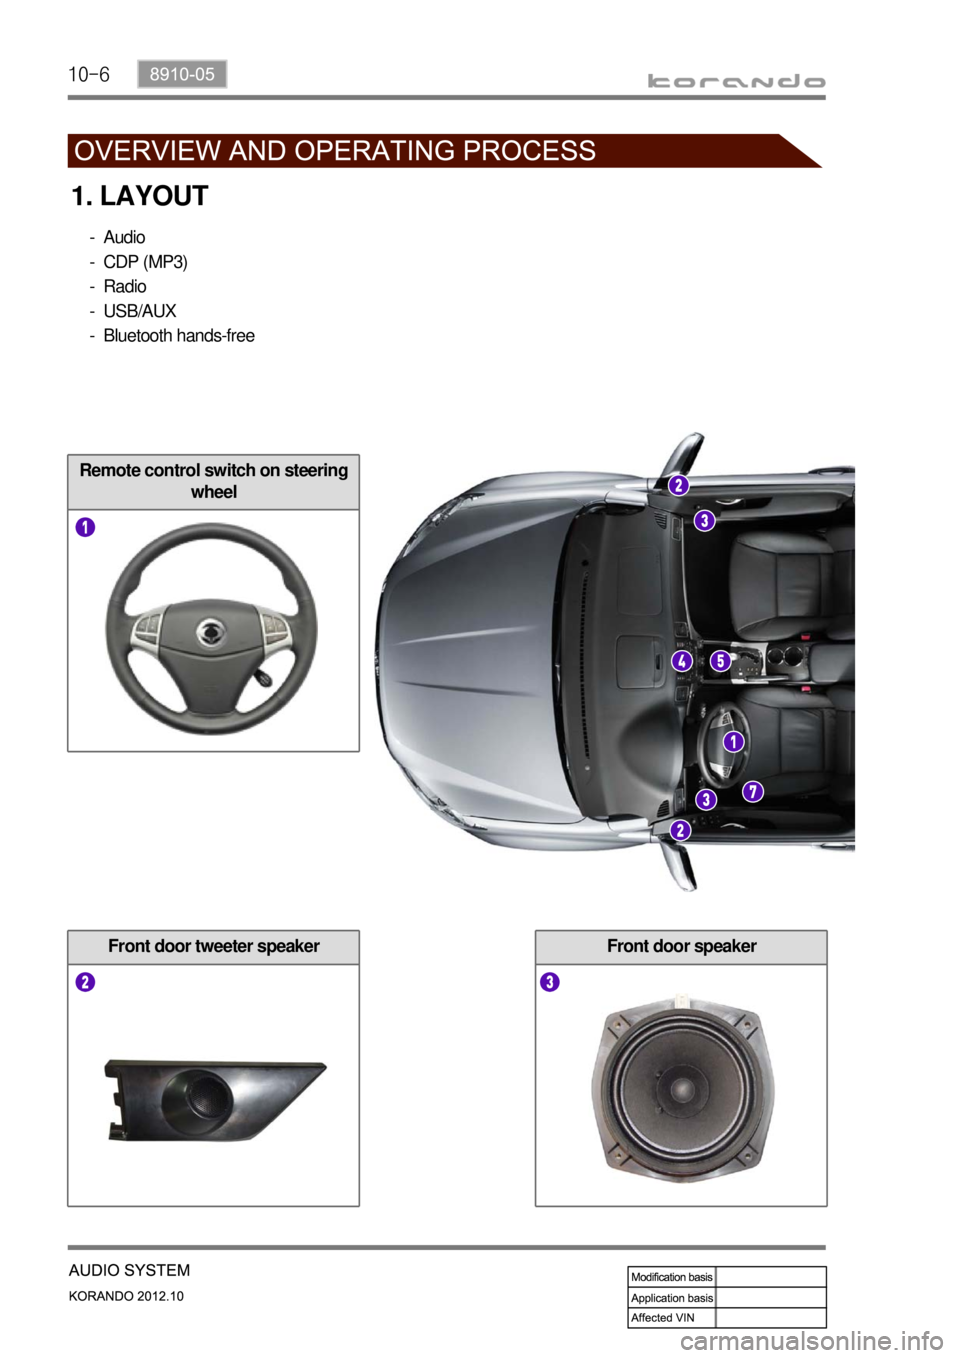 SSANGYONG KORANDO 2012  Service Manual 10-6
Front door speaker
Remote control switch on steering 
wheel
1. LAYOUT
Audio
CDP (MP3)
Radio
USB/AUX
Bluetooth hands-free -
-
-
-
-
Front door tweeter speaker 